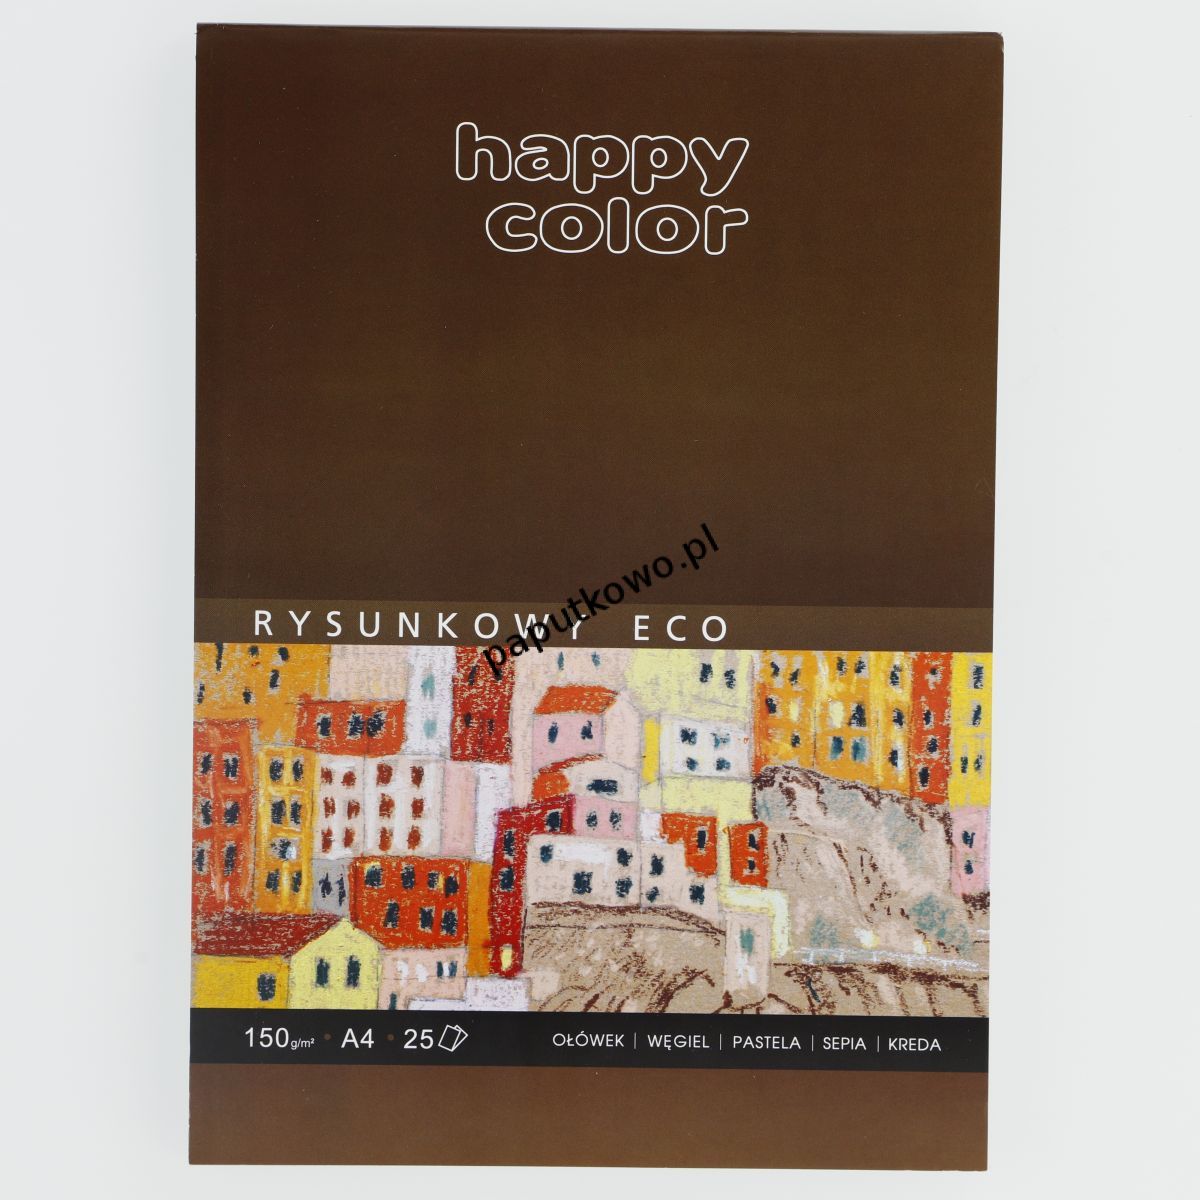 Blok rysunkowy Gdd Happy Color rysunkowy eko młody artysta A4 150g 25k (HA 3715 2030 A25)